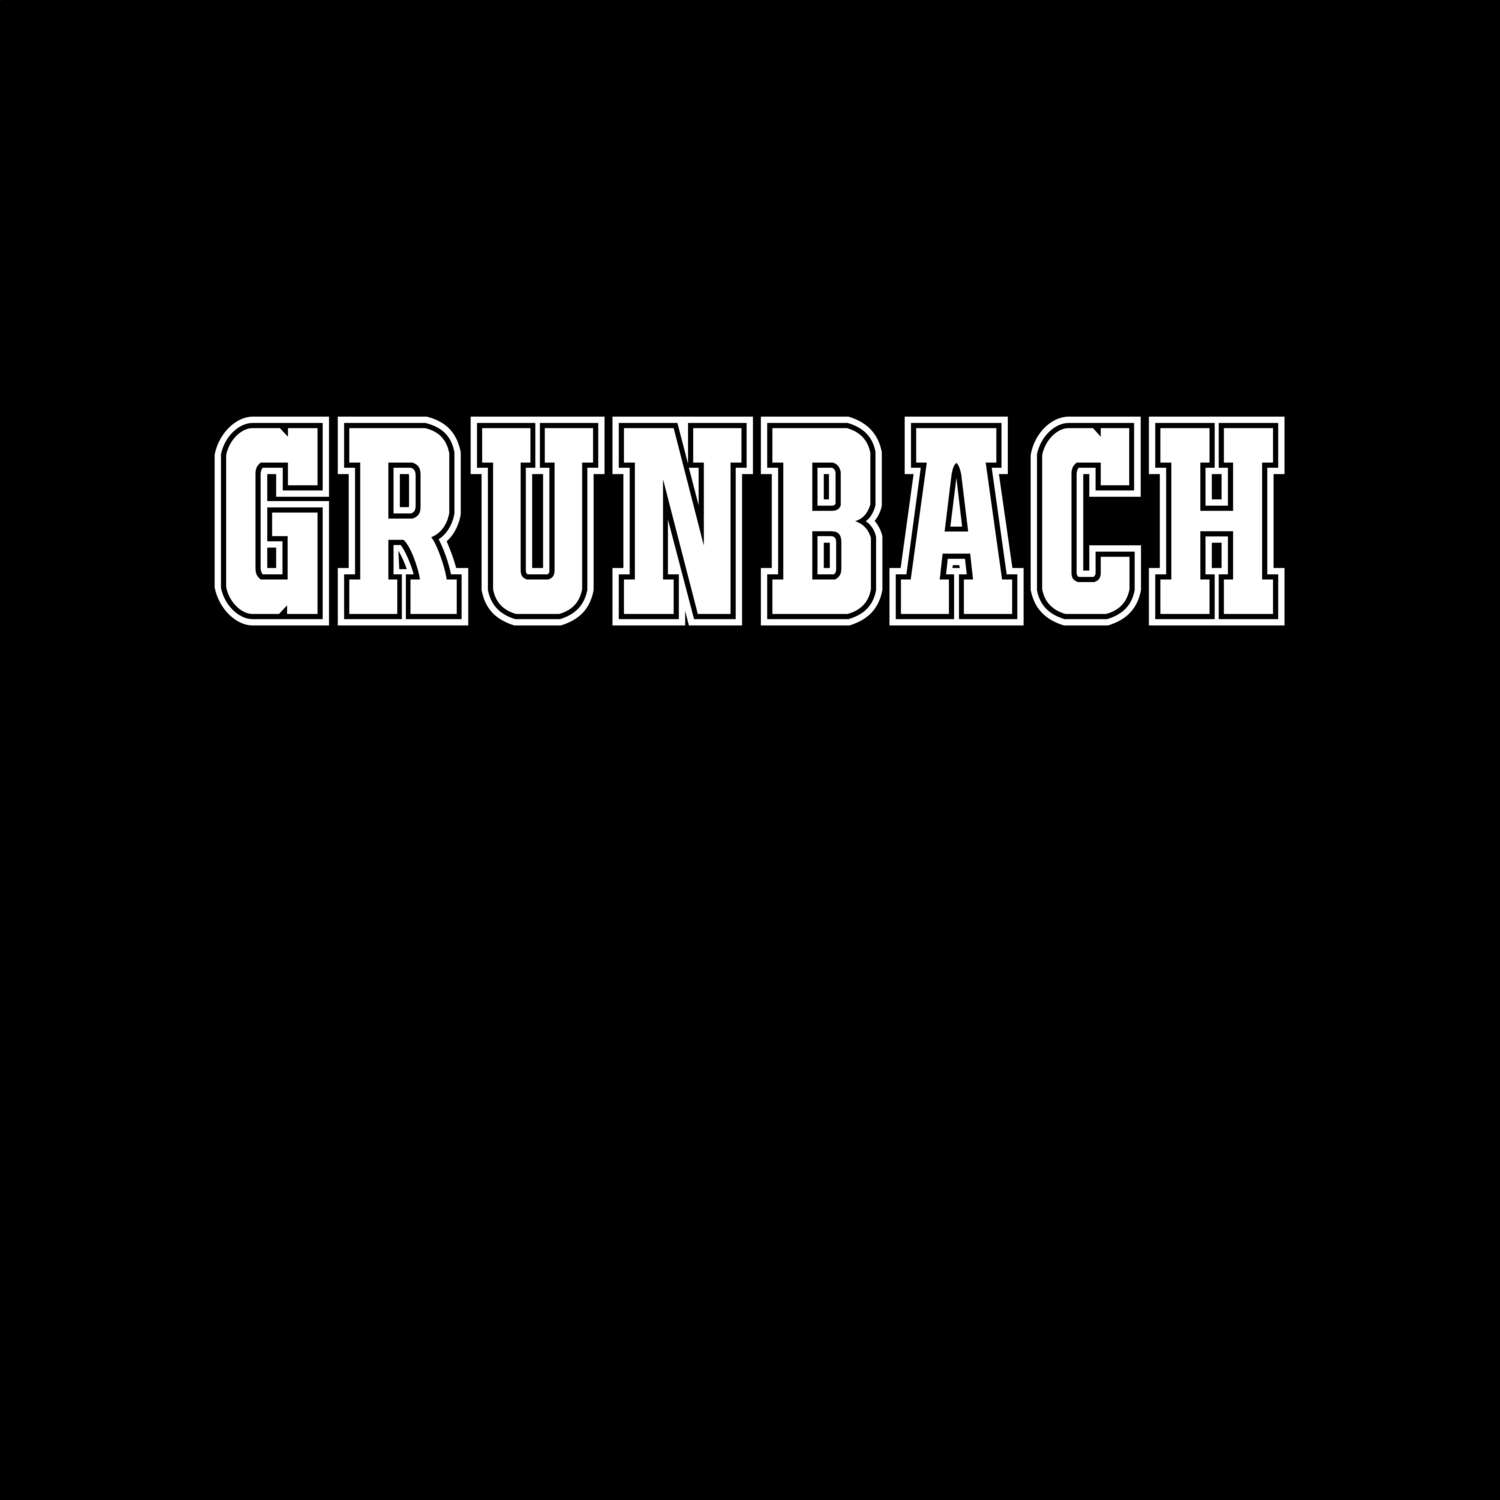 Grunbach T-Shirt »Classic«